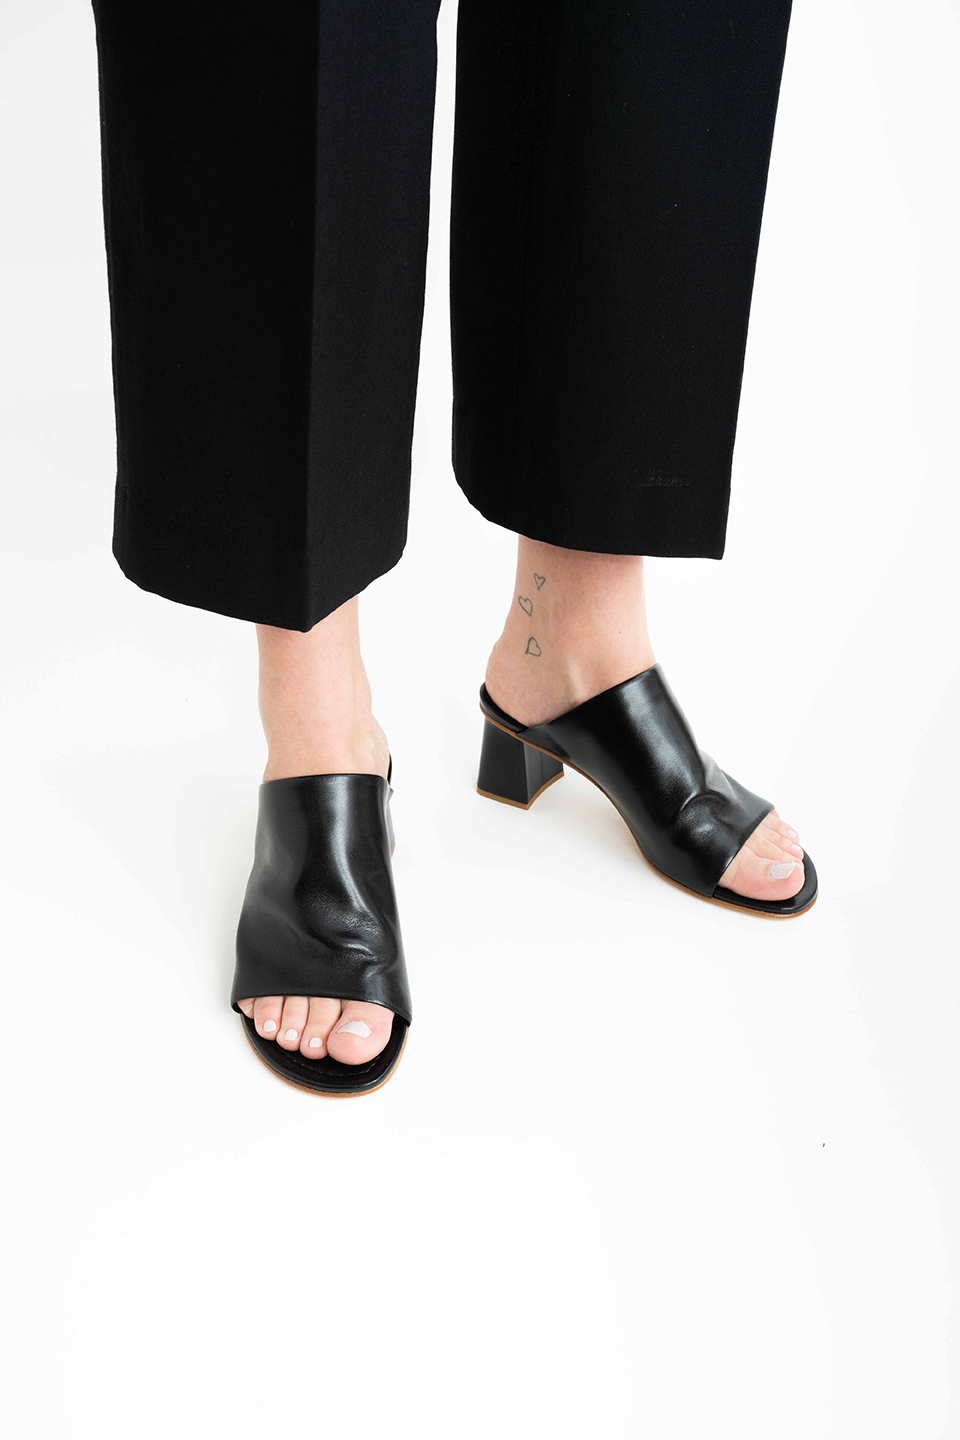 Aida sandals, black leather